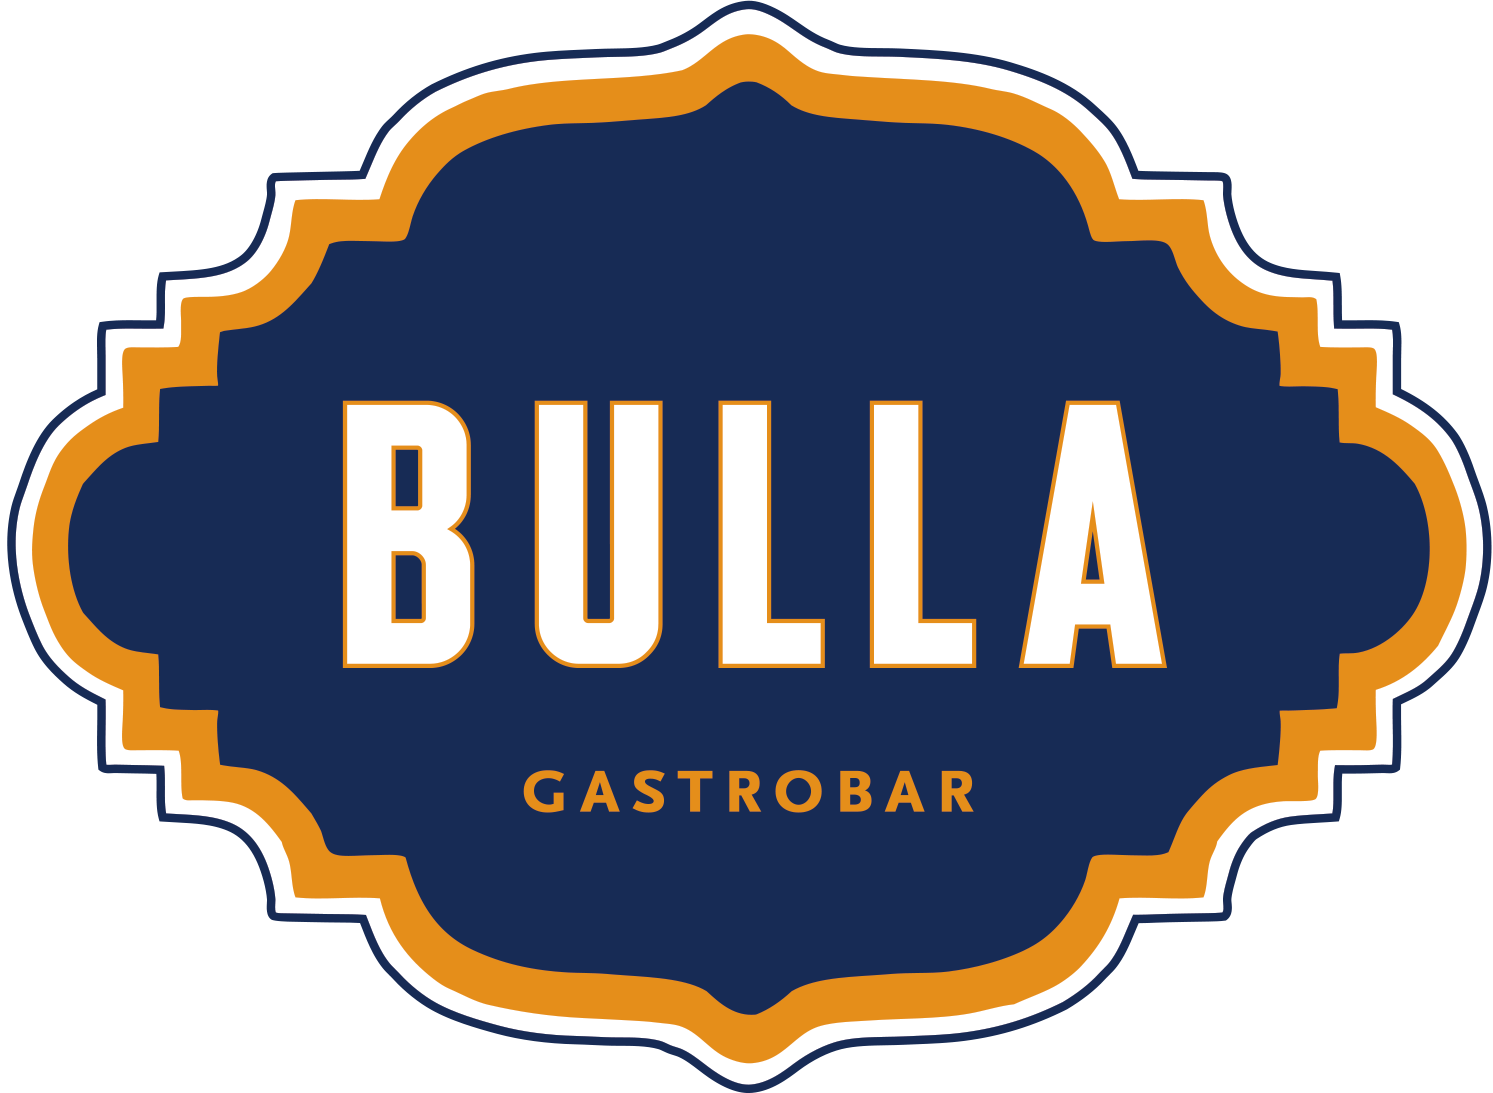 Bulla Gastrobar Doral